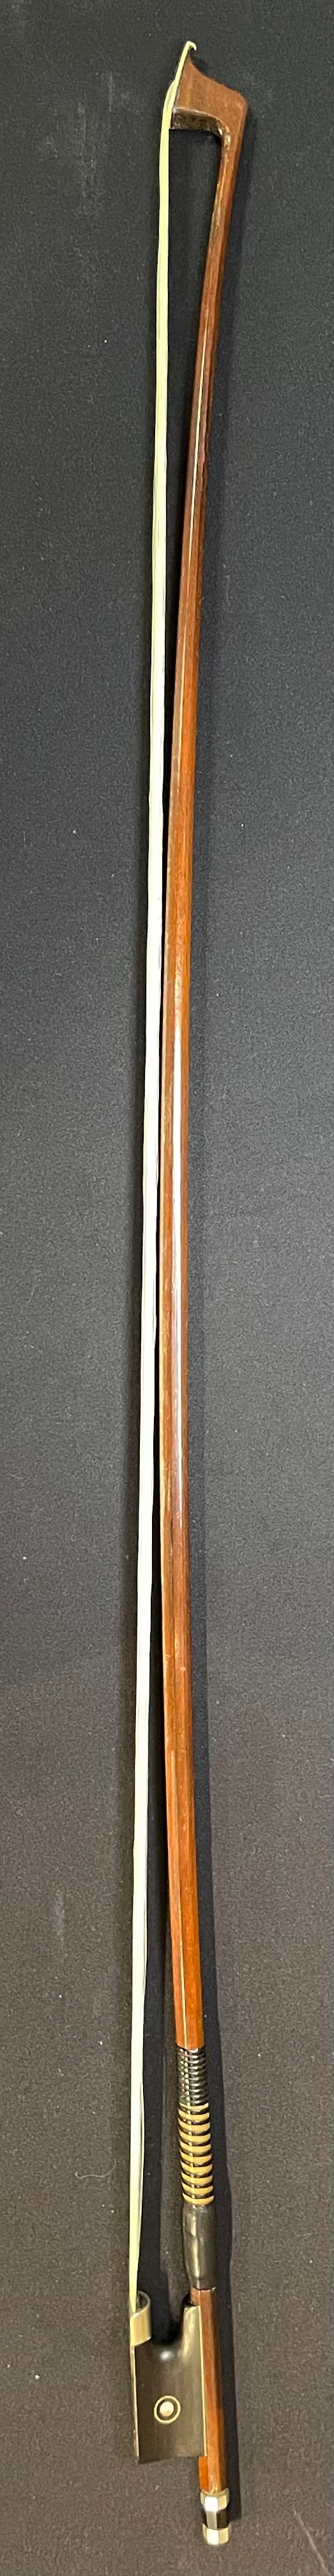 4/4 Violin Bow - Otto R. Pfretzschner Wood Model